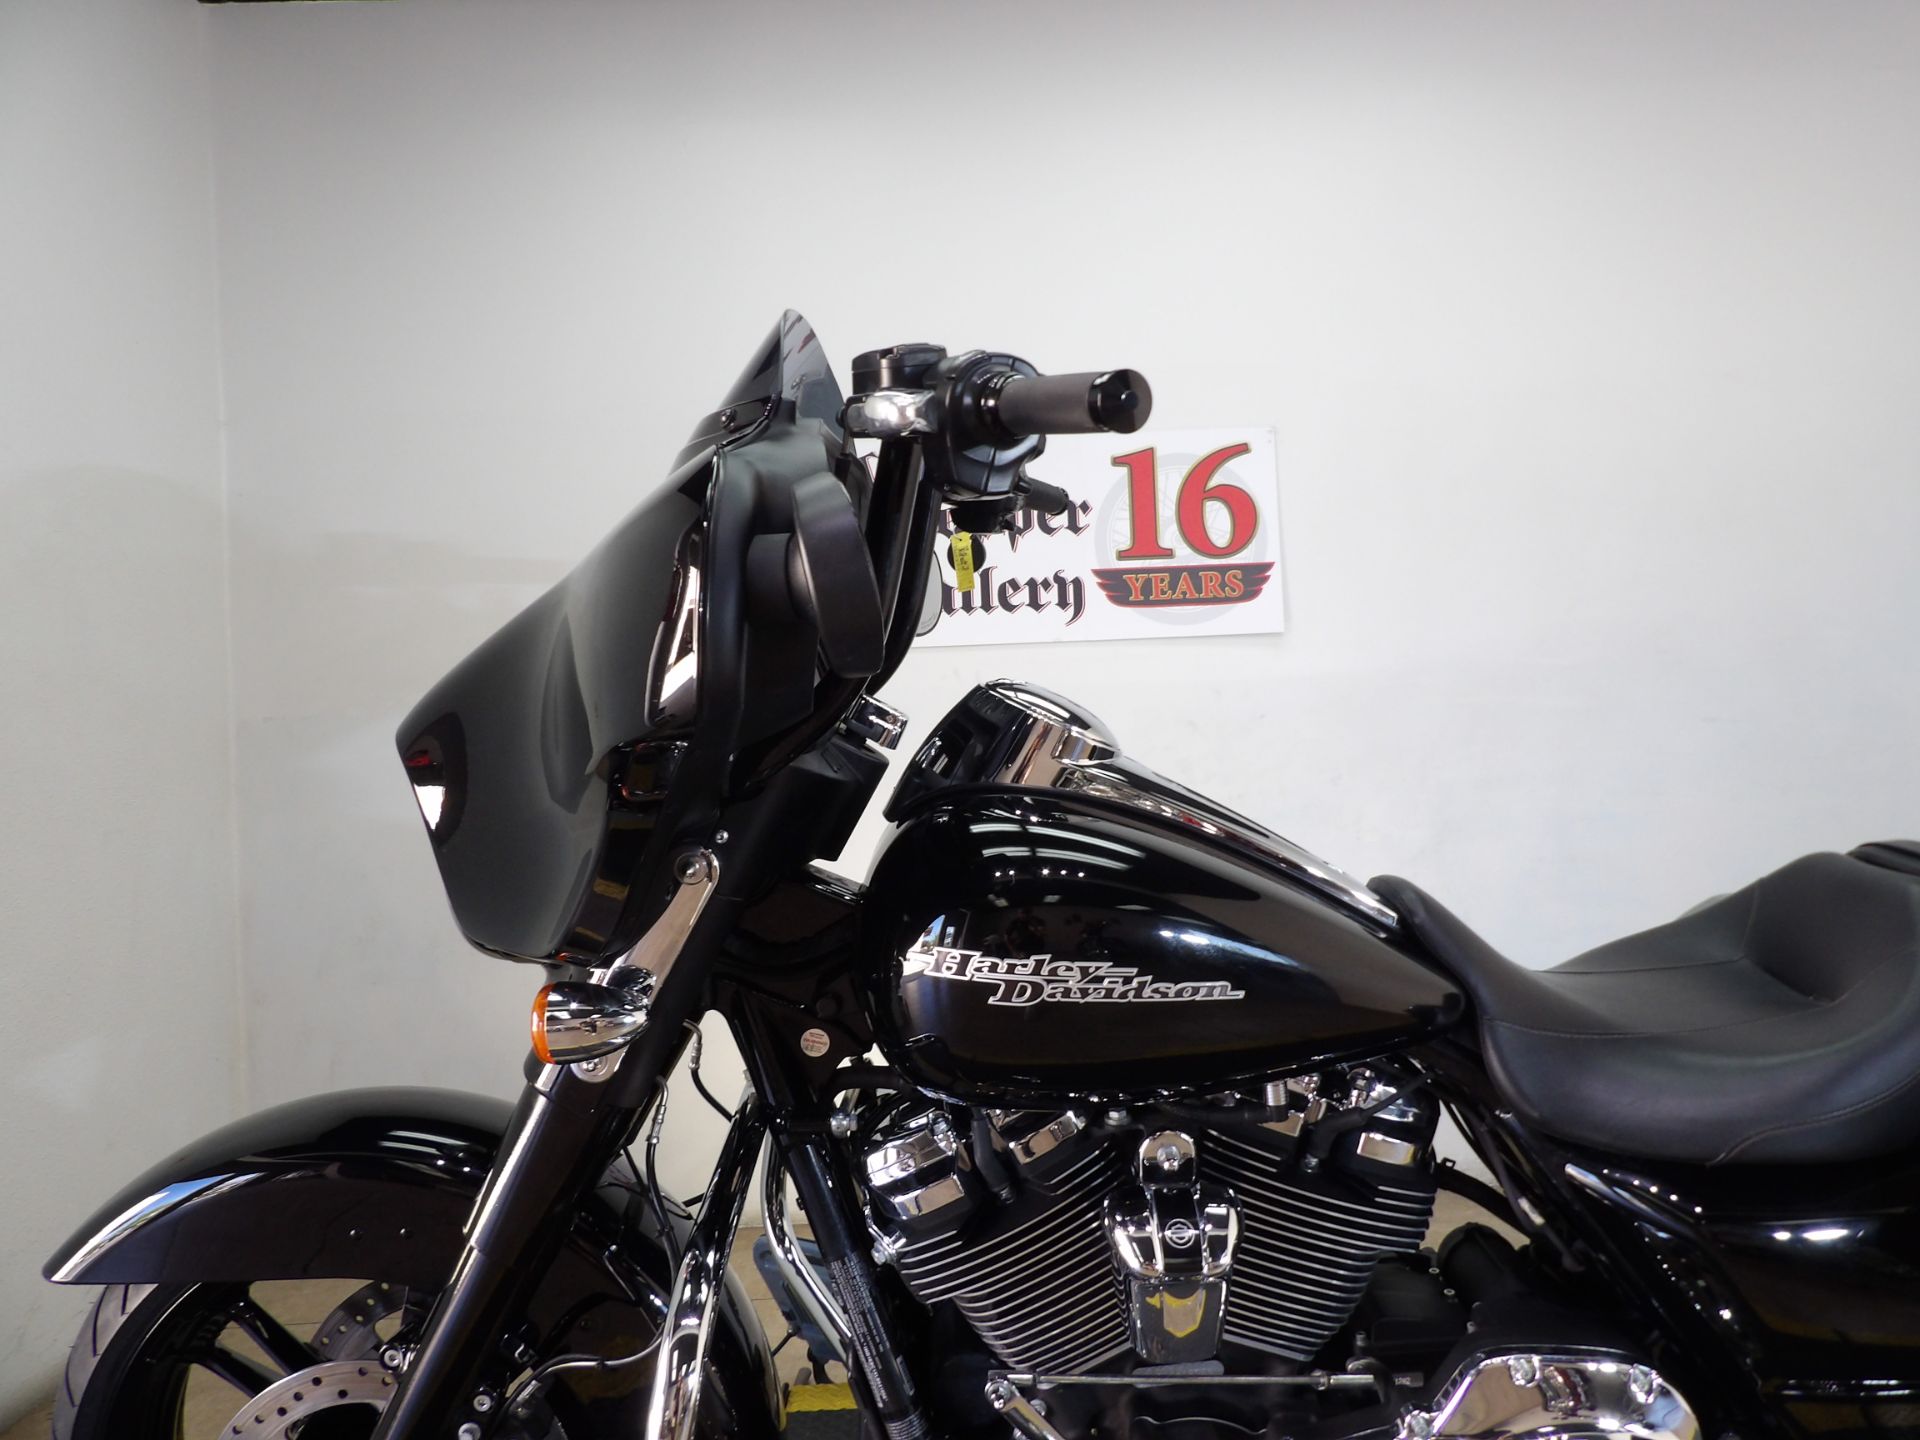 2020 Harley-Davidson Street Glide® in Temecula, California - Photo 10